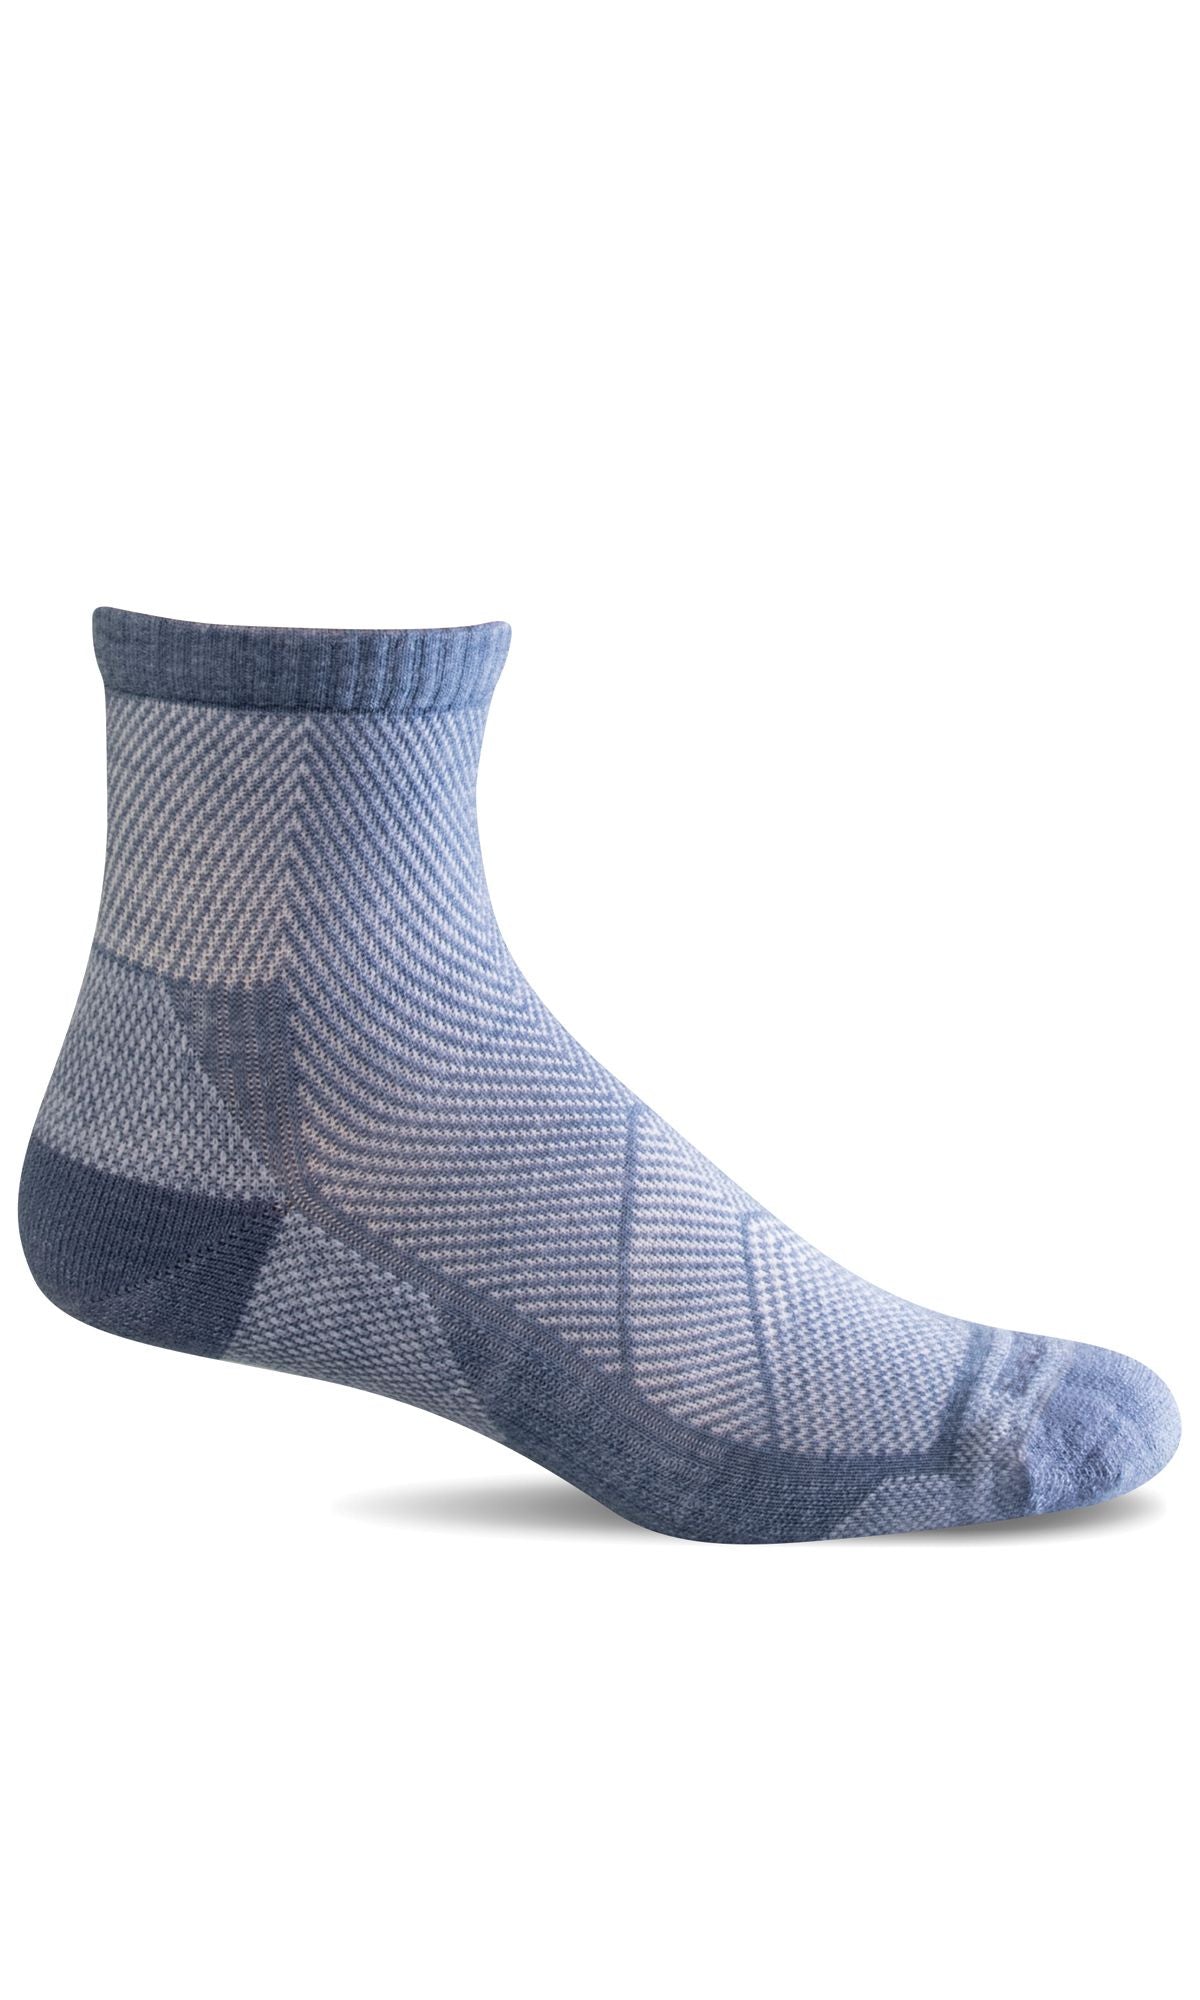 Sockwell Men's Pulse Firm Graduated Compression Socks, Grey, Large X-Large